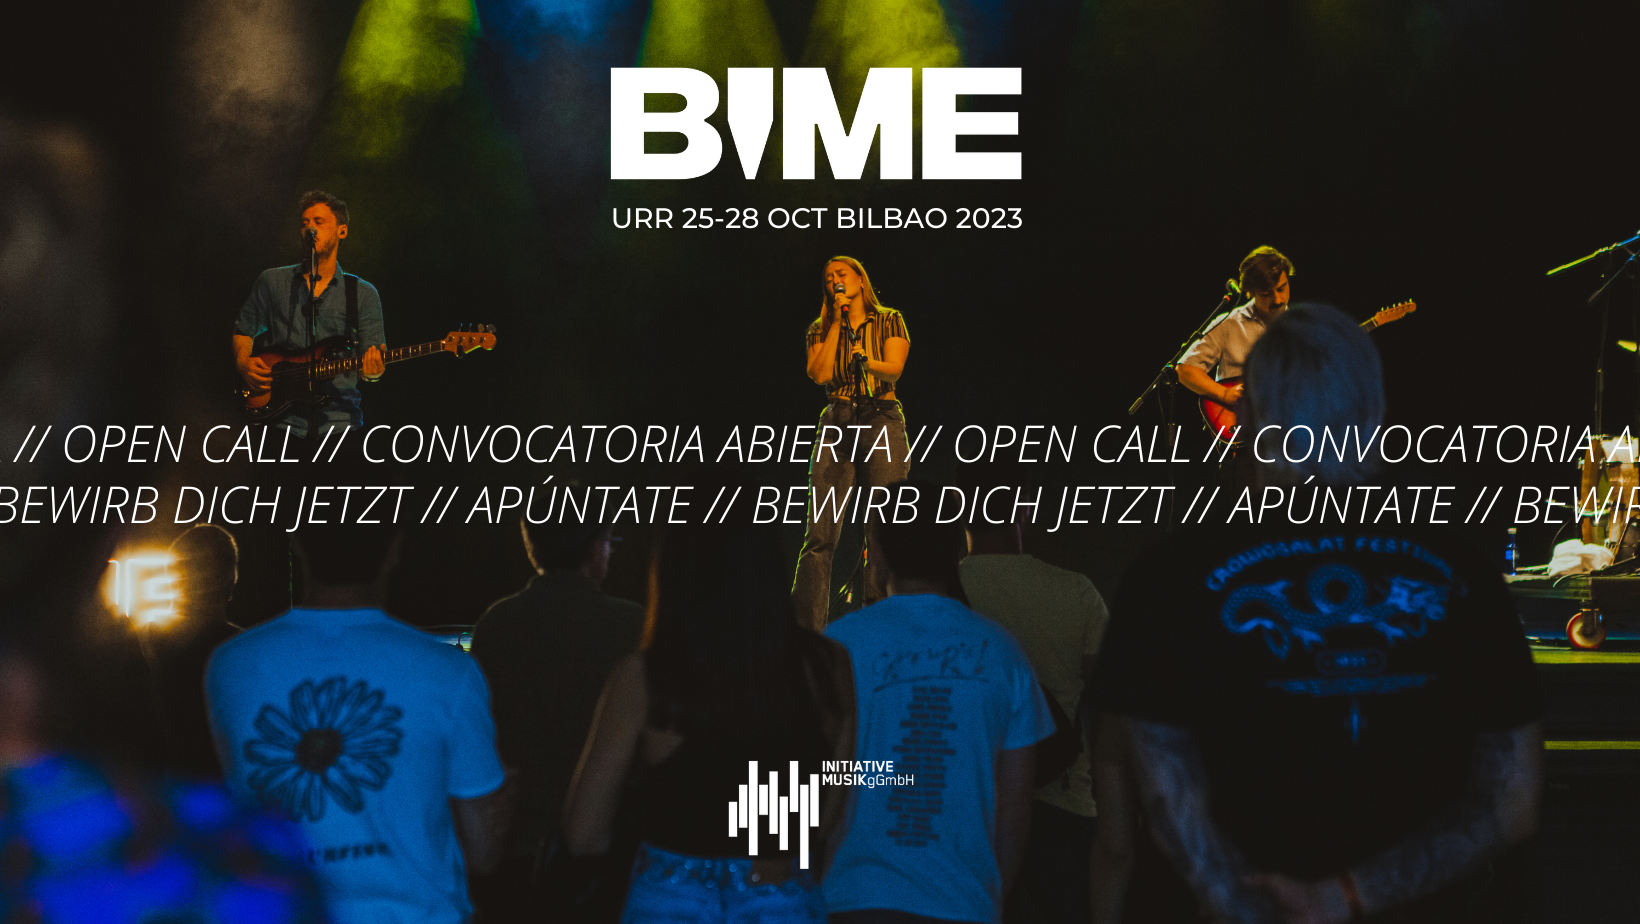 Open call for BIME Bilbao 2023!